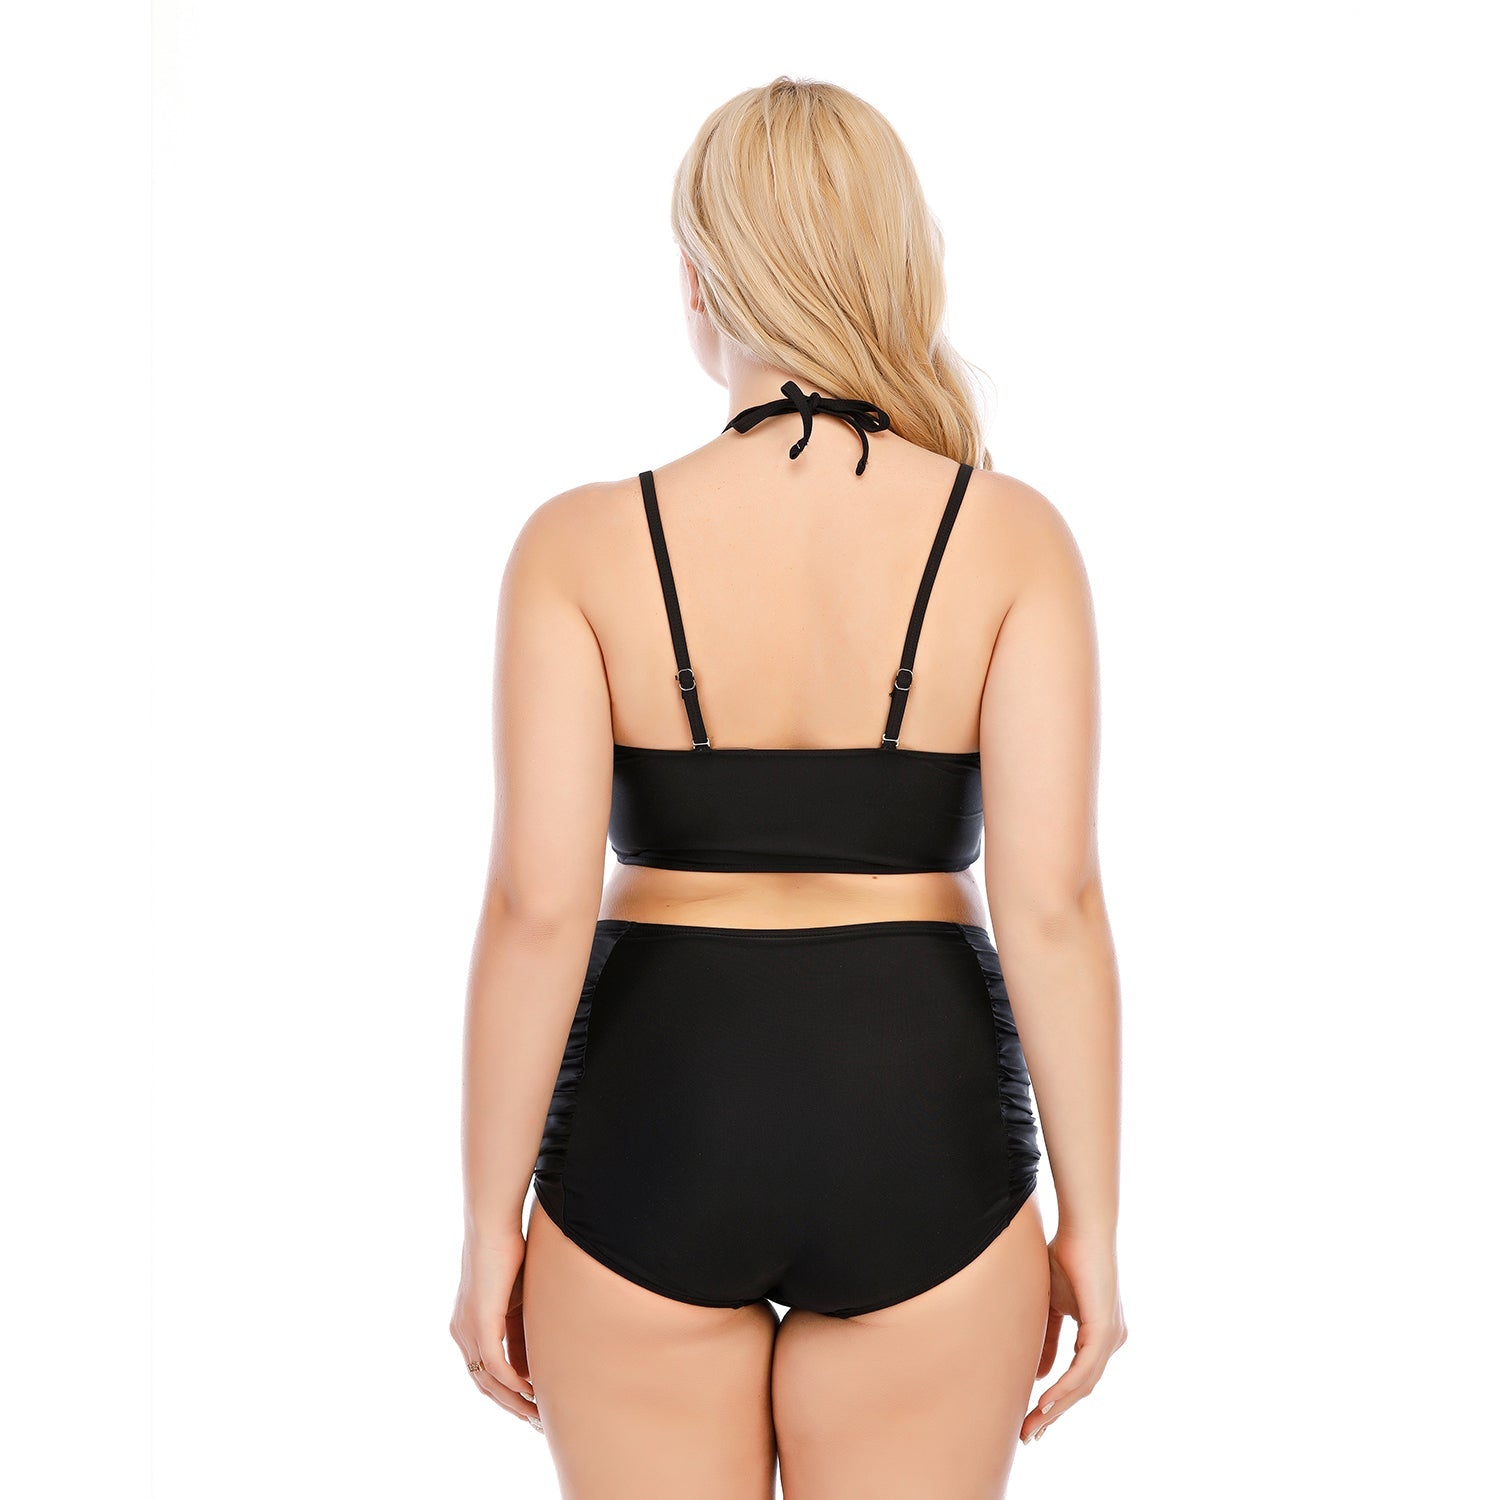 SiySiy Plus Size Two Piece Black Fishnet Swimwear Triangle Bottoms Swimsuit